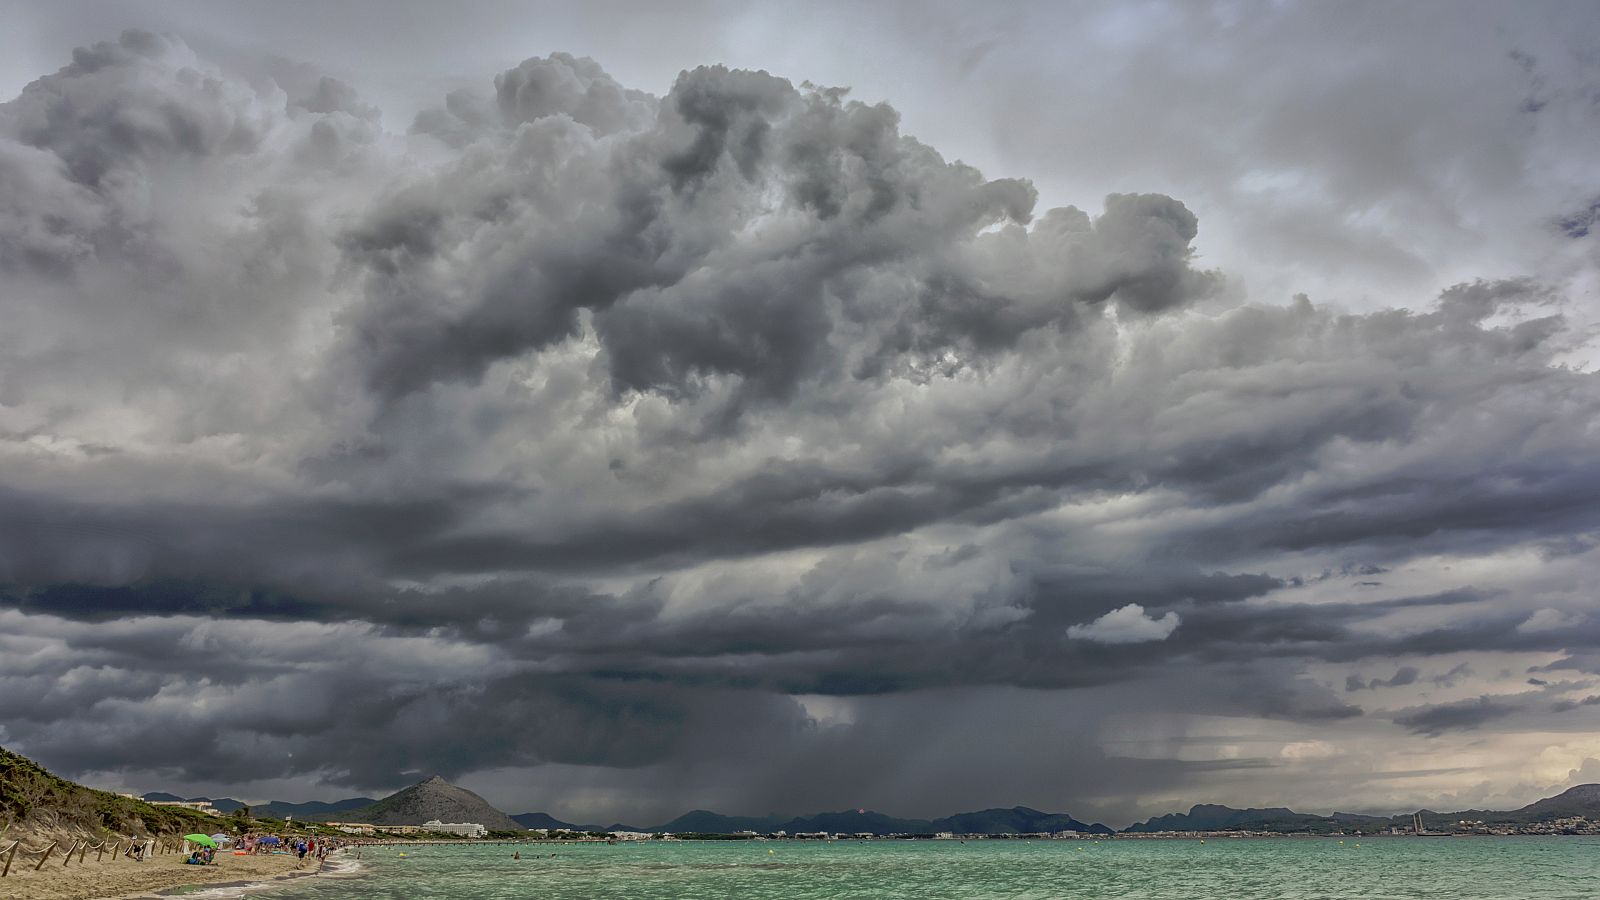 Fuerte tormenta en una playa de la isla de Mallorca.